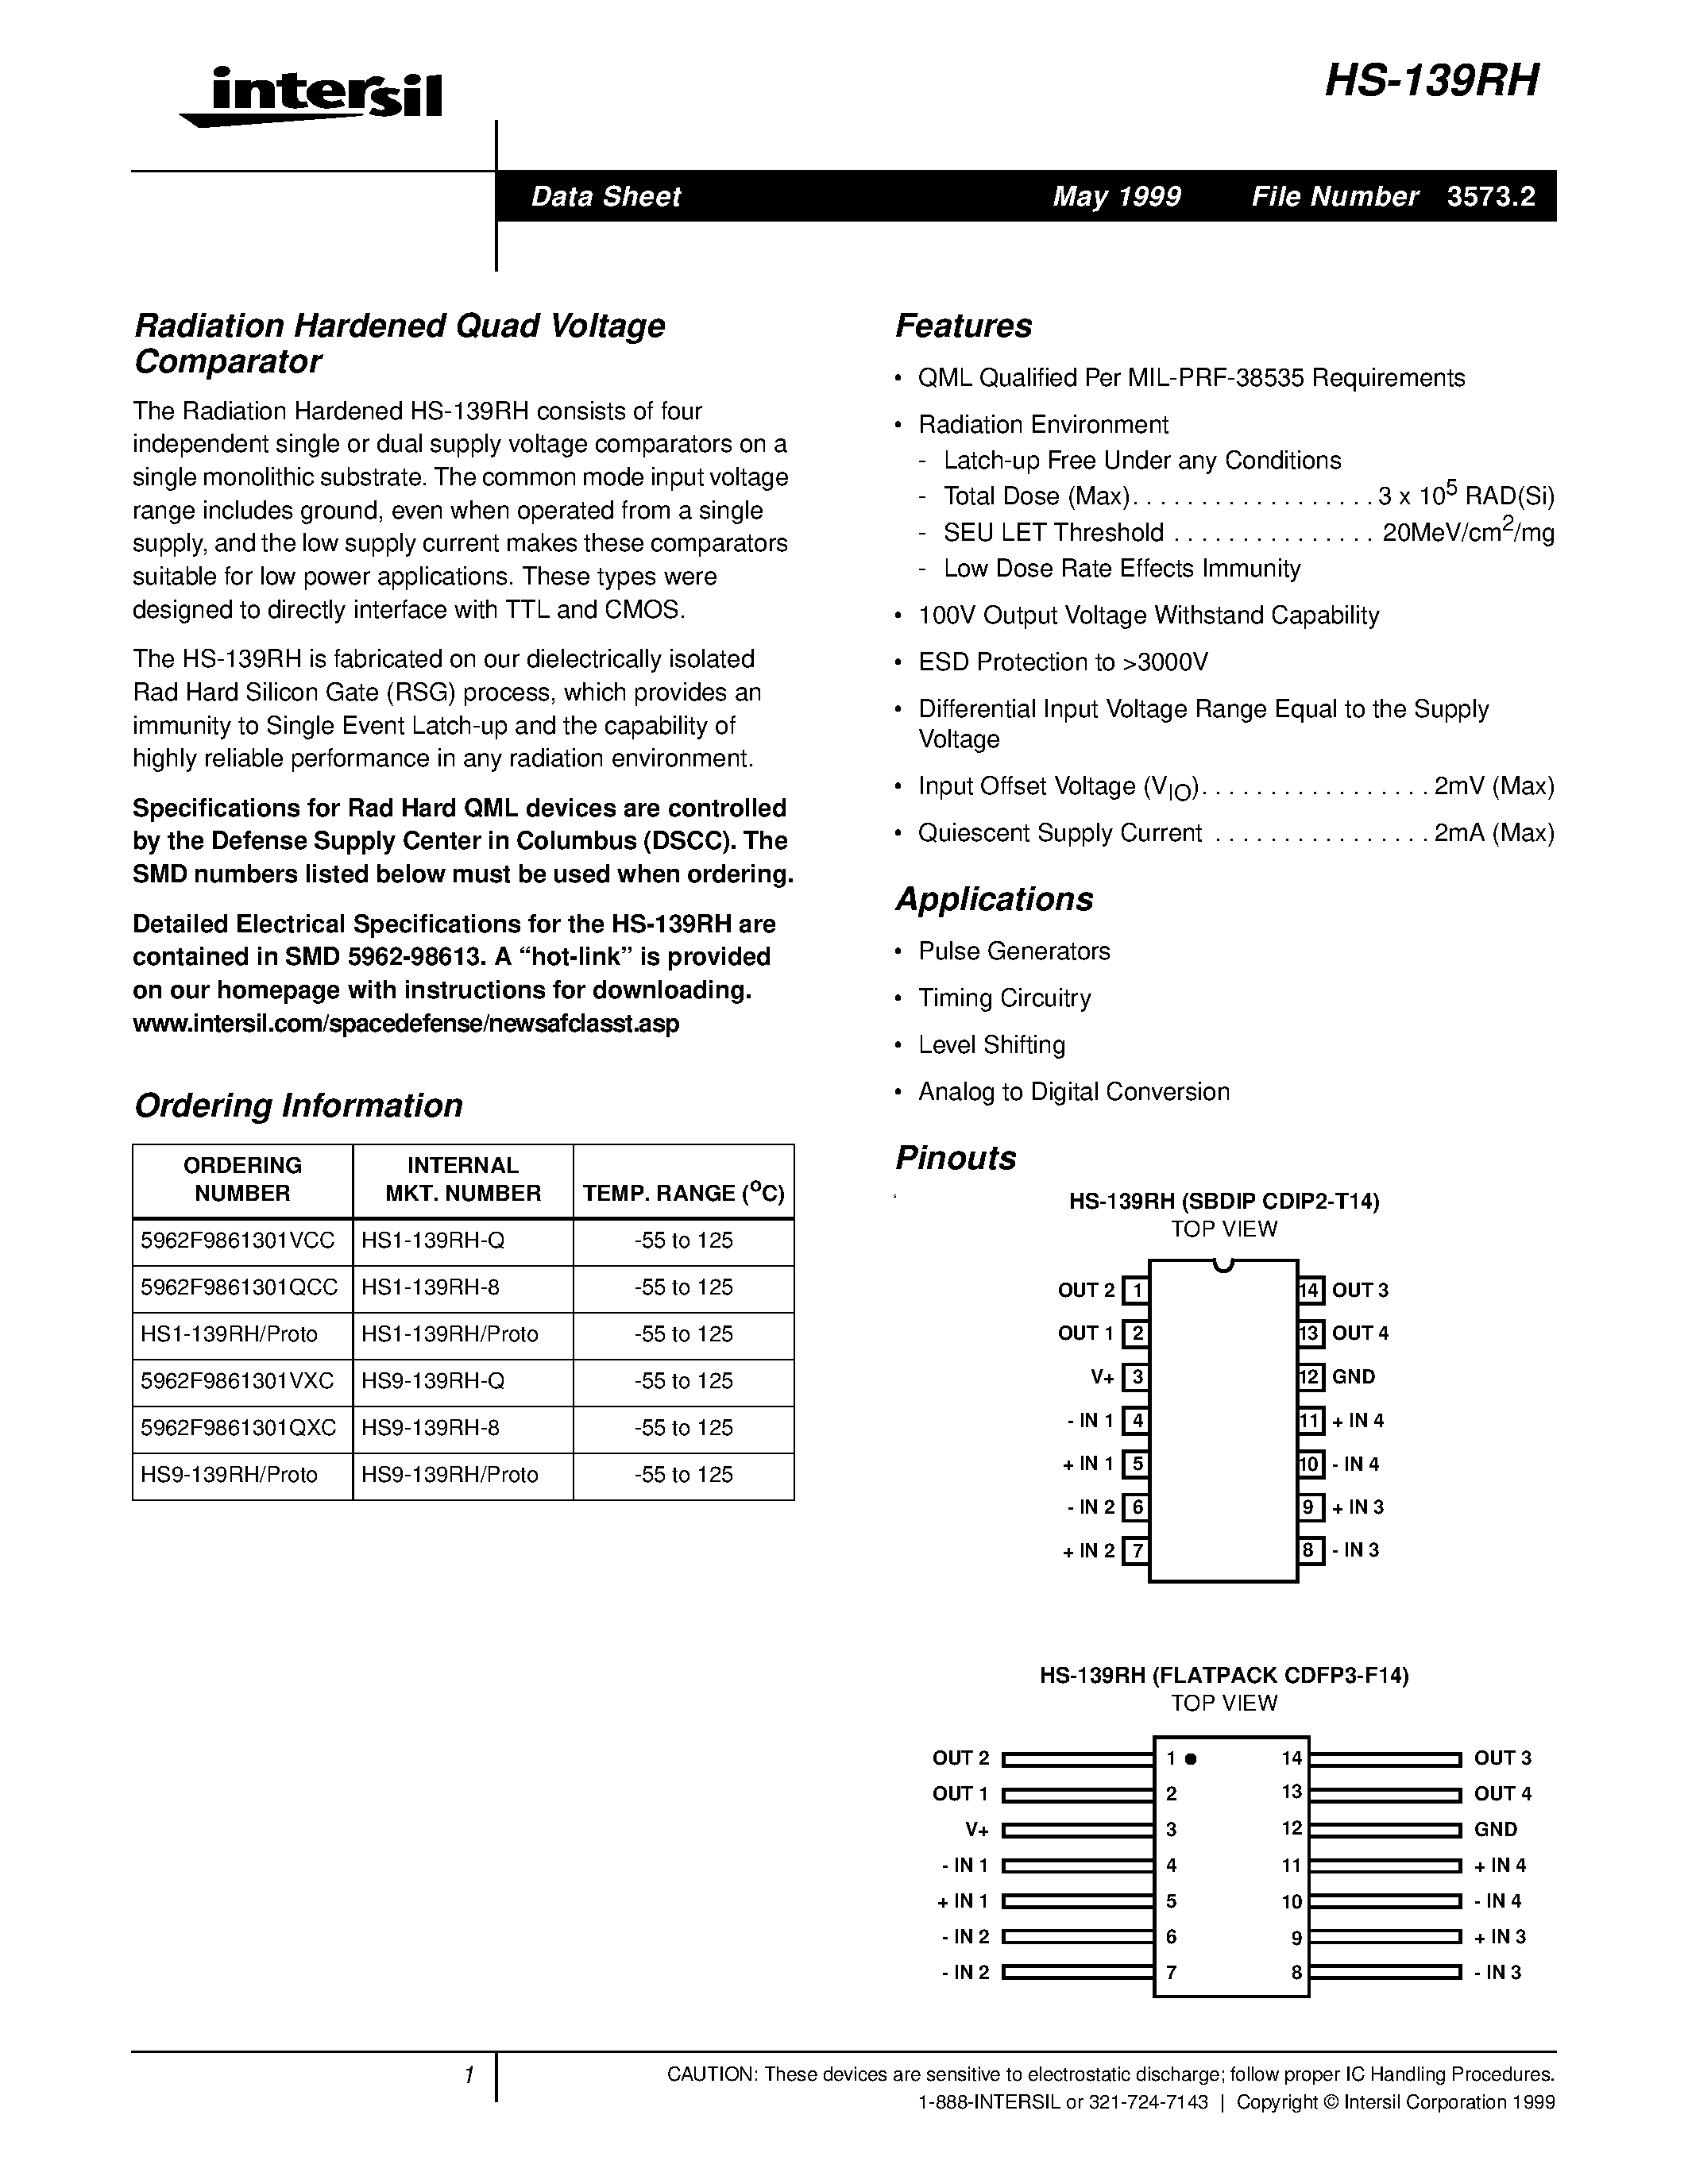 Даташит HS1-139RH-Q - Radiation Hardened Quad Voltage Comparator страница 1